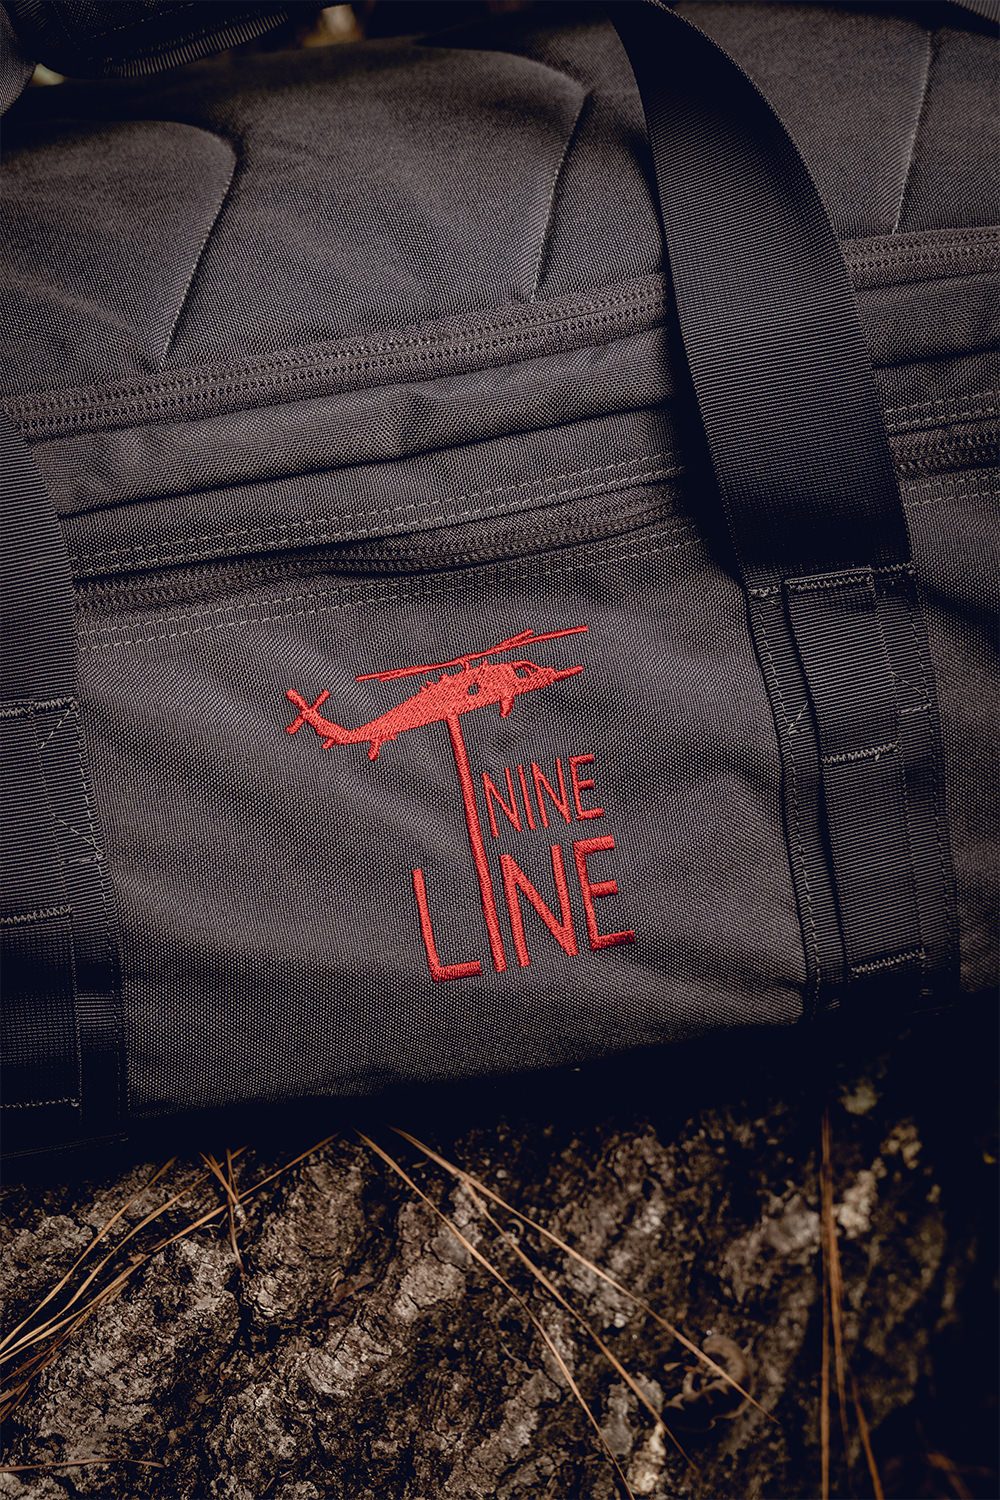 Drop Line Duffel Bag - Nine Line Apparel